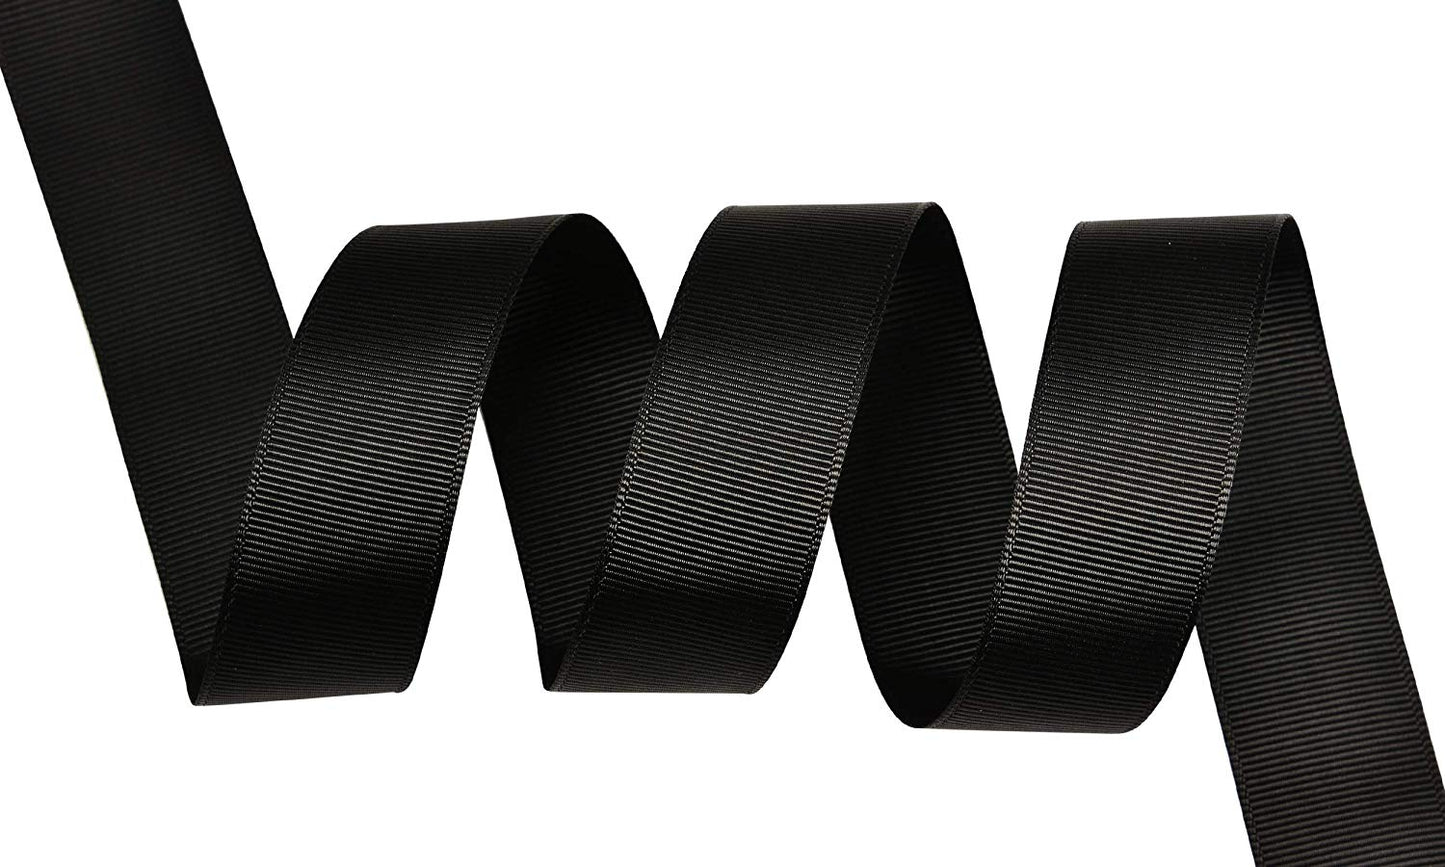 5 Yards Solid Black Grosgrain Ribbon Yardage DIY Crafts Bows USA